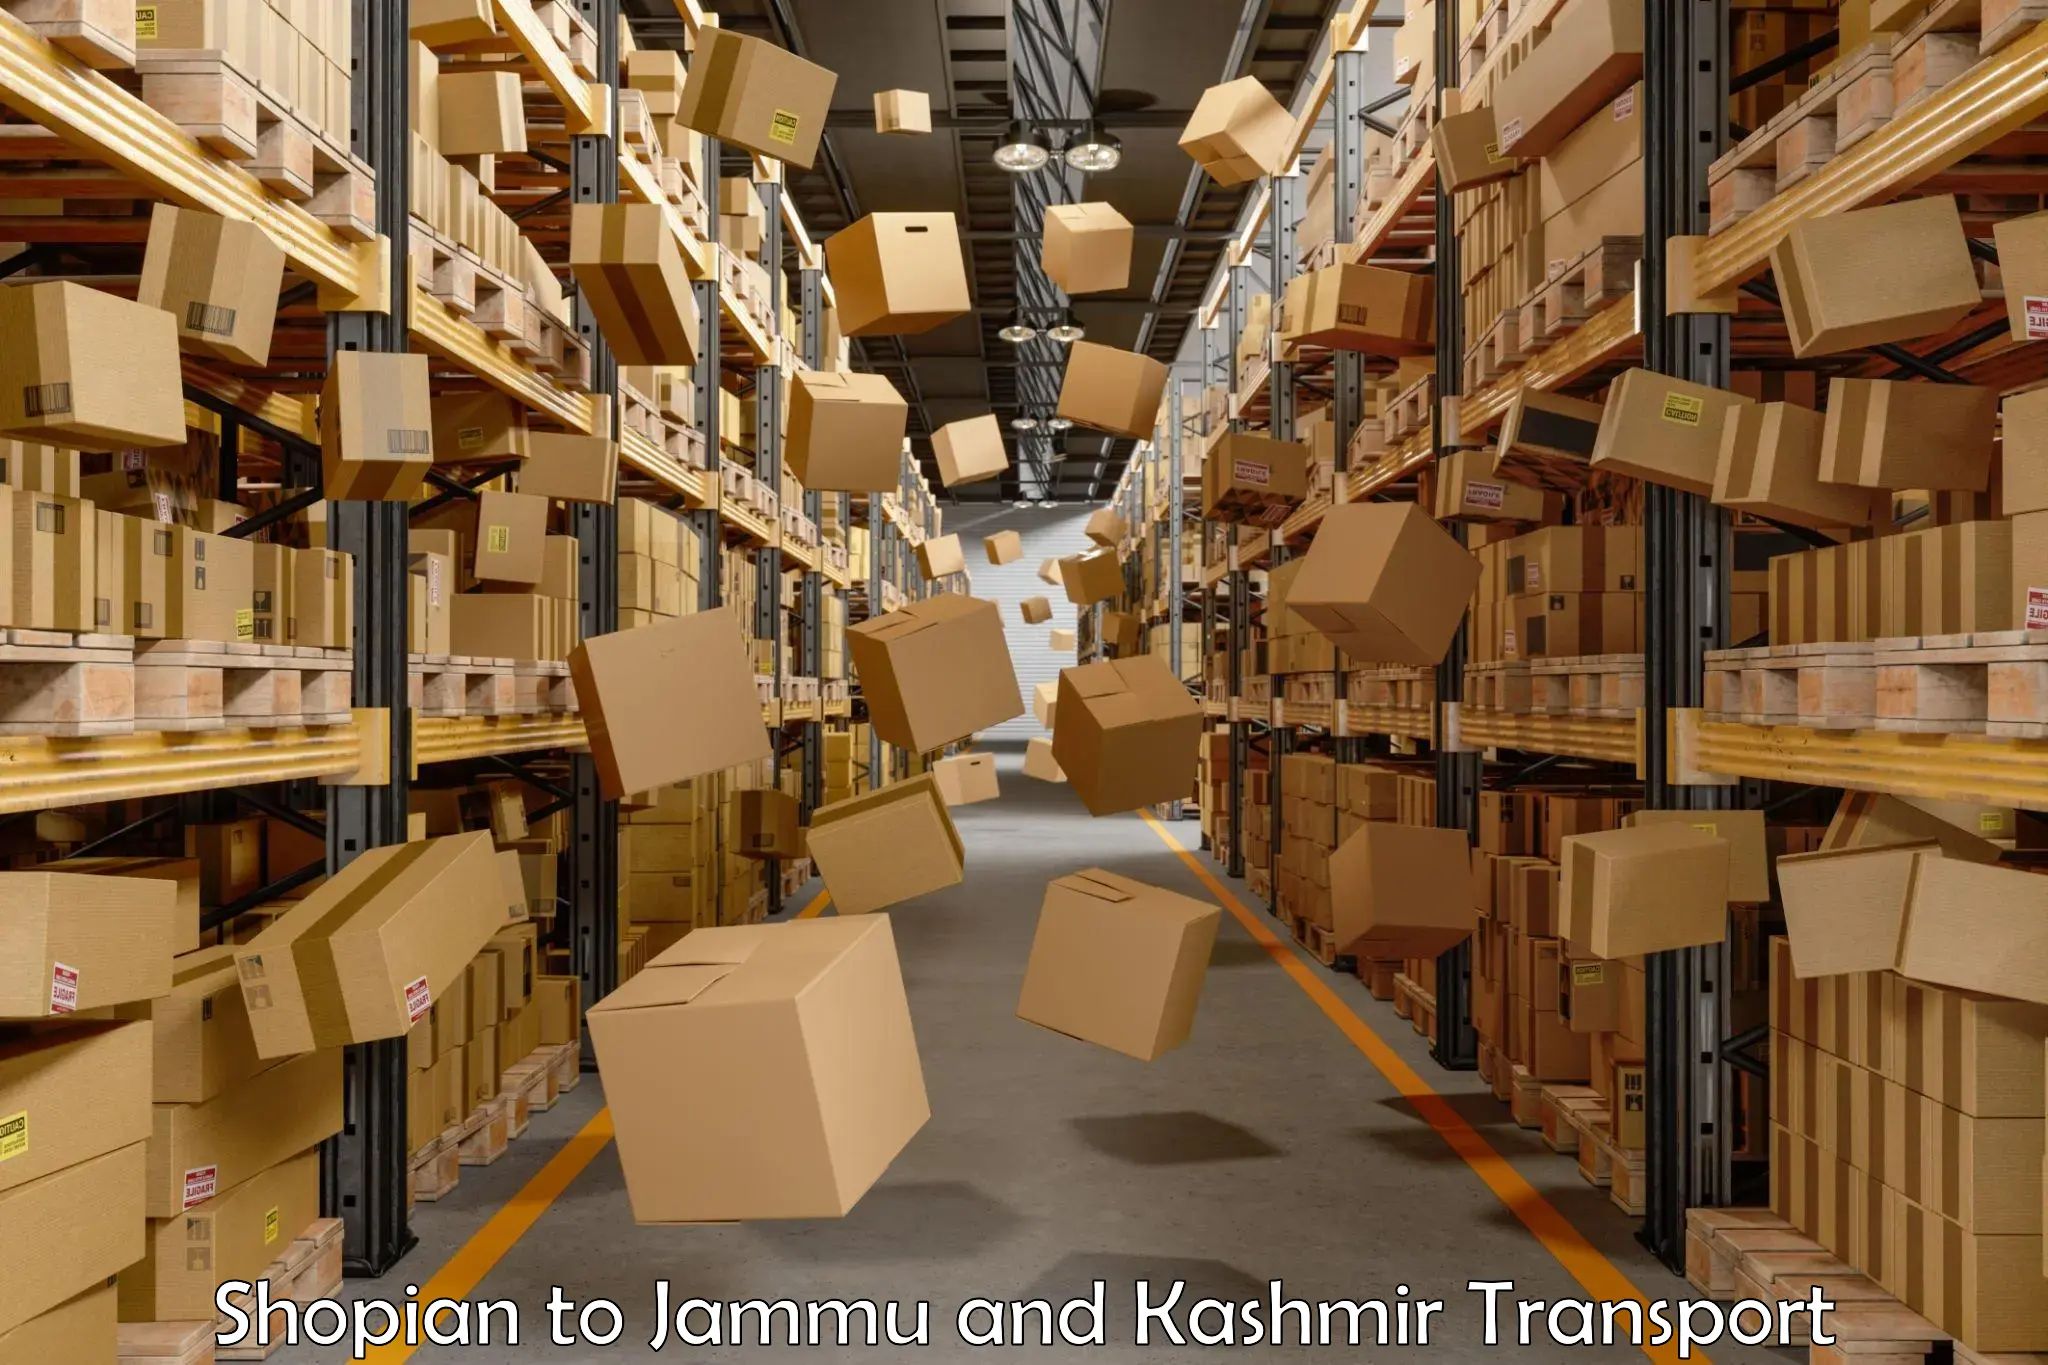 Truck transport companies in India Shopian to Jammu